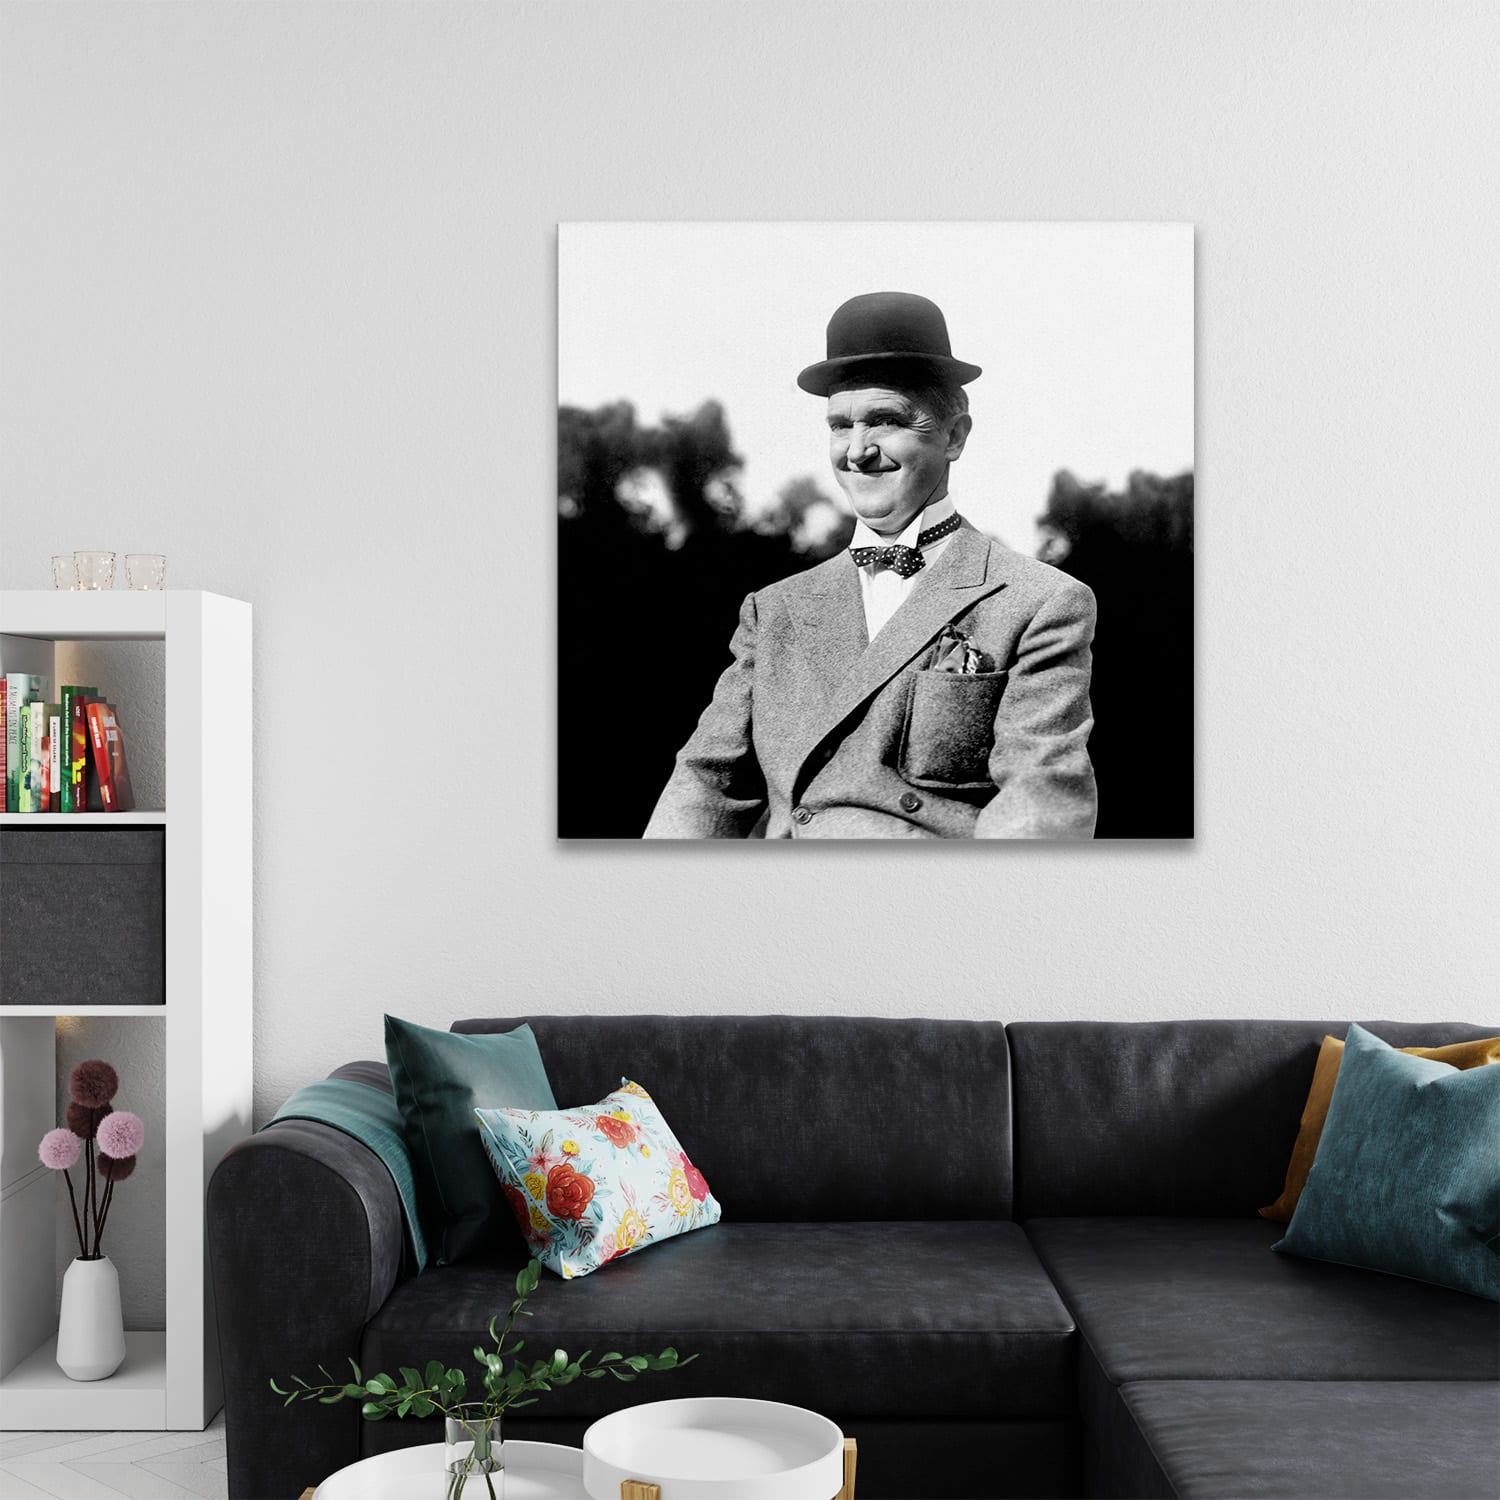 Tablou portret actor comedie Stan Laurel alb negru 1550 camera 2 - Afis Poster Tablou ochi cu design creativ multicolor detaliu pentru living casa birou bucatarie livrare in 24 ore la cel mai bun pret.